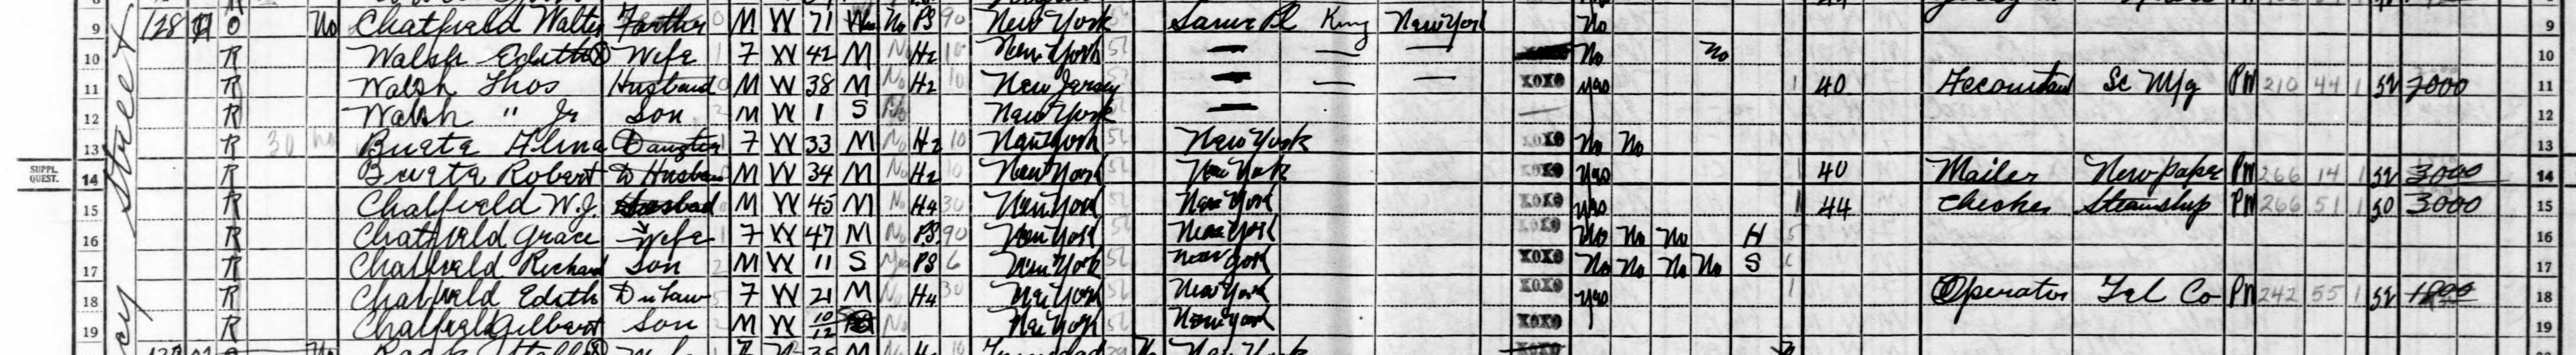 CHATFIELD Walter Clark 1870-1942 census 1940.jpg